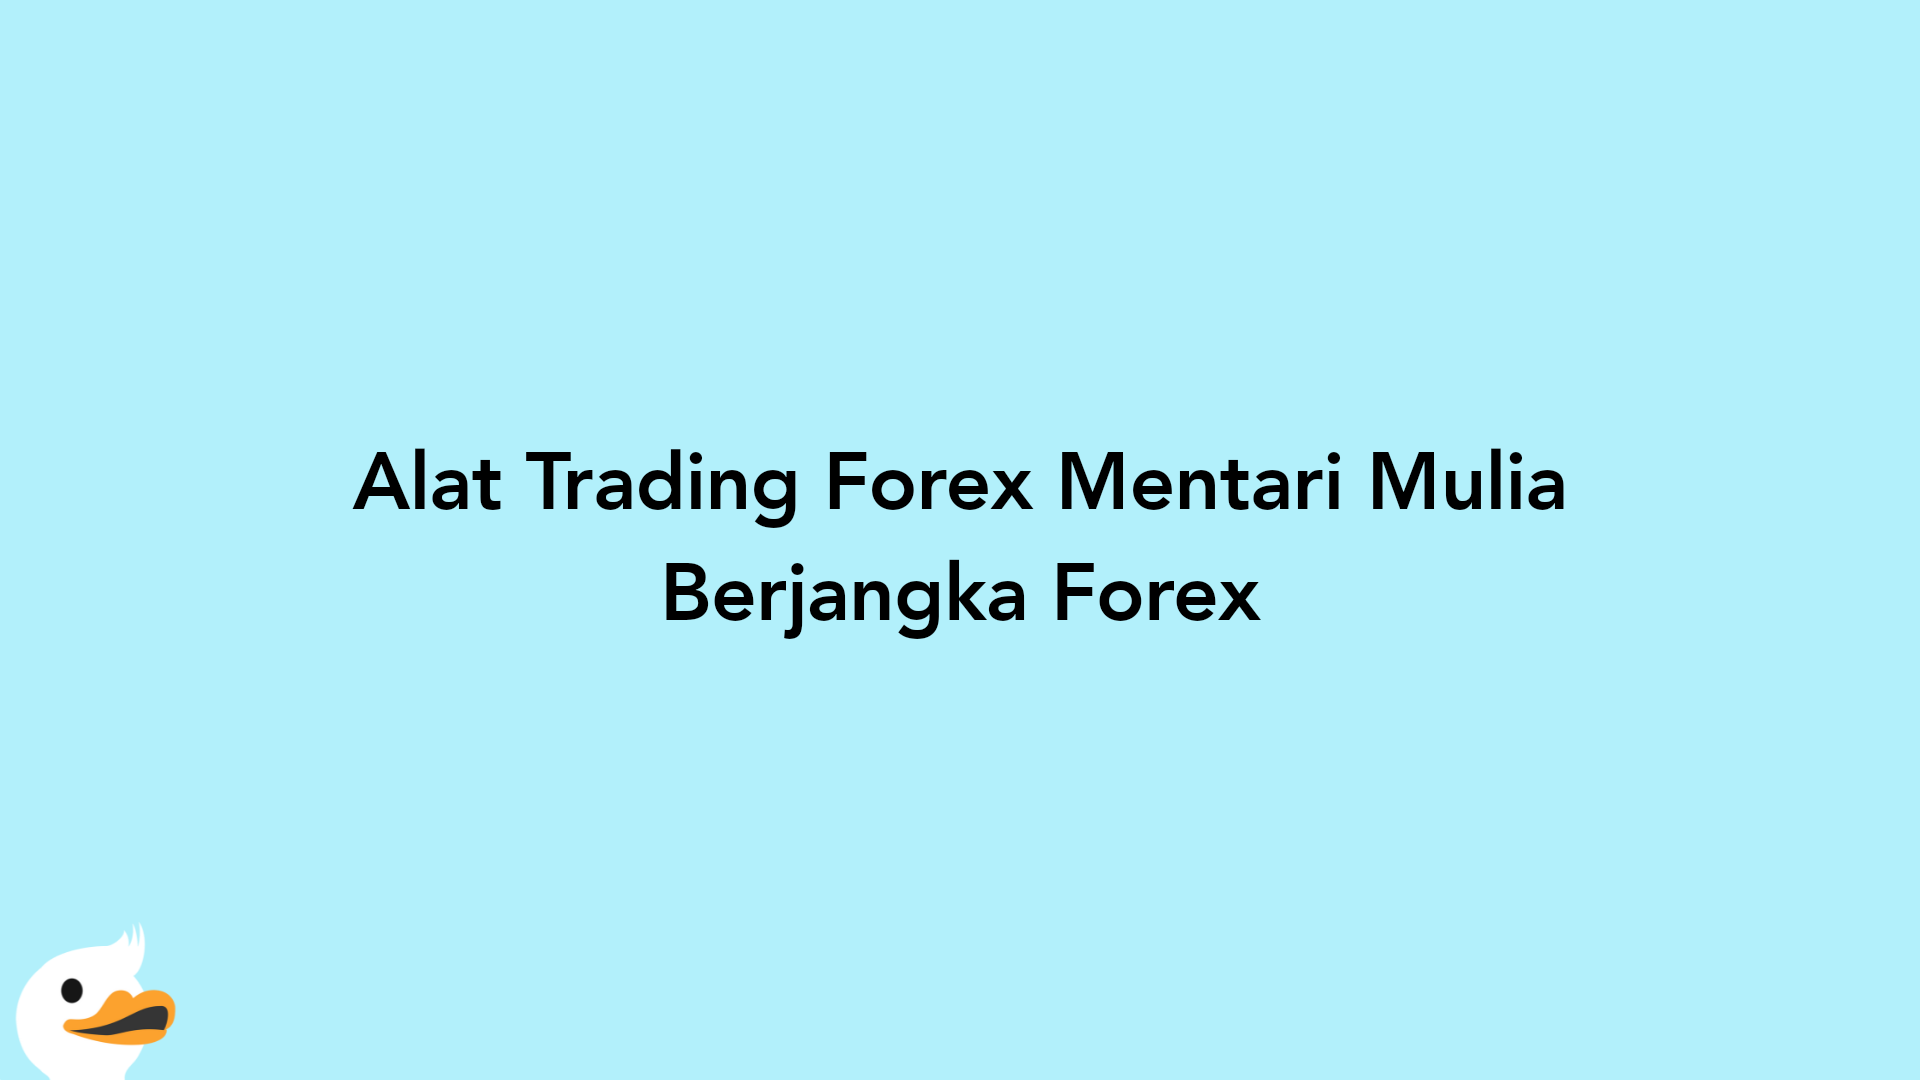 Alat Trading Forex Mentari Mulia Berjangka Forex